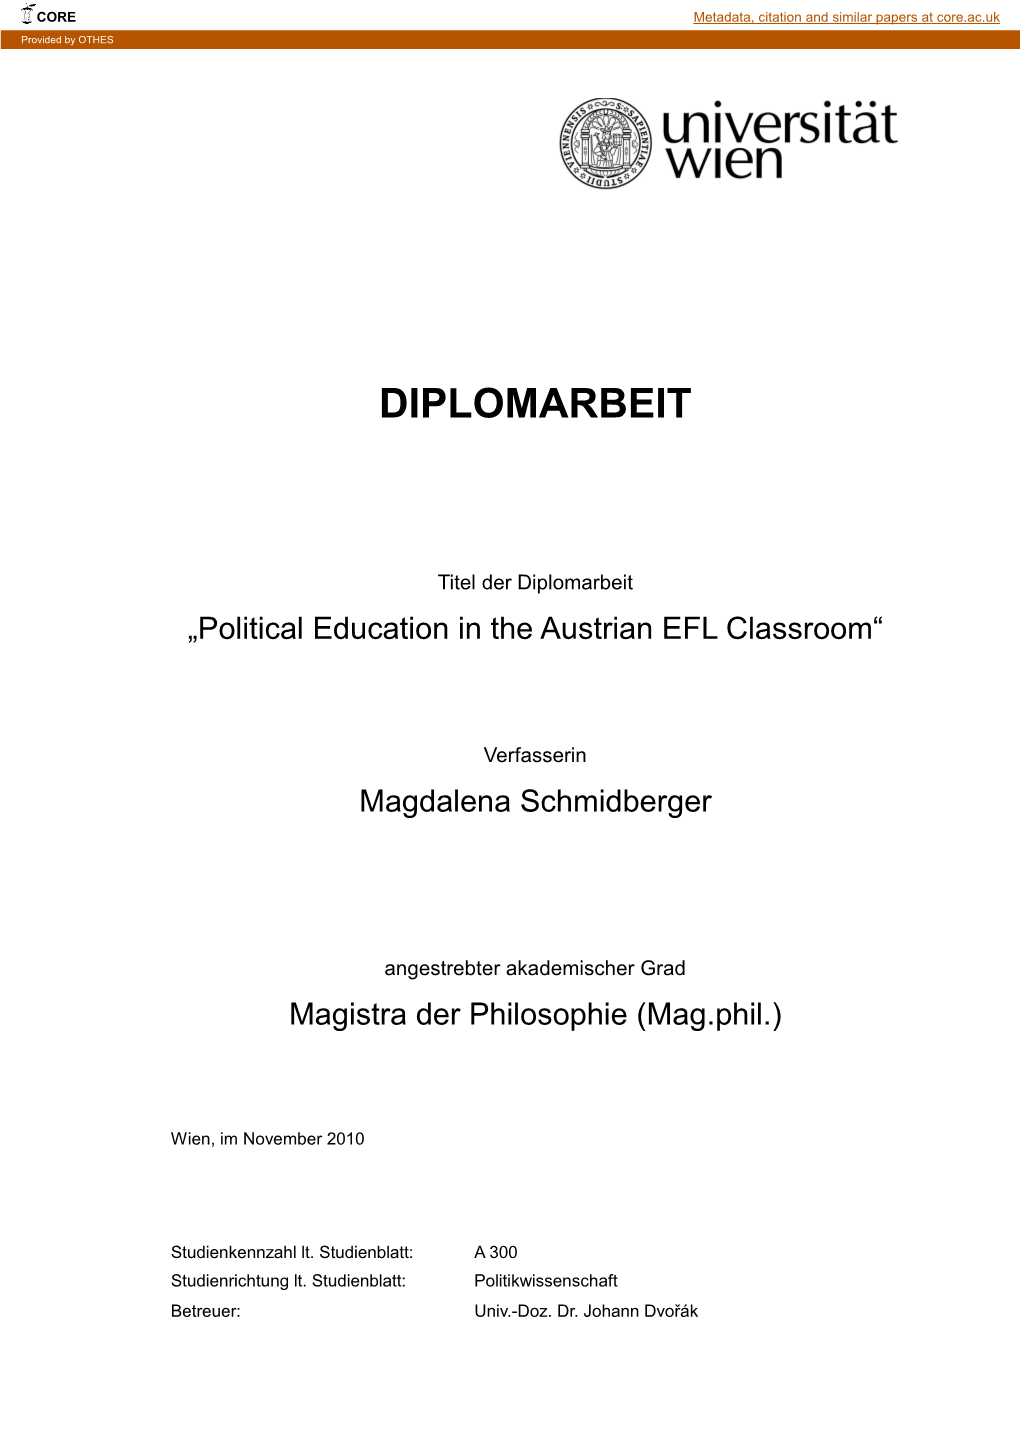 Political Education in the Austrian EFL Classroom“